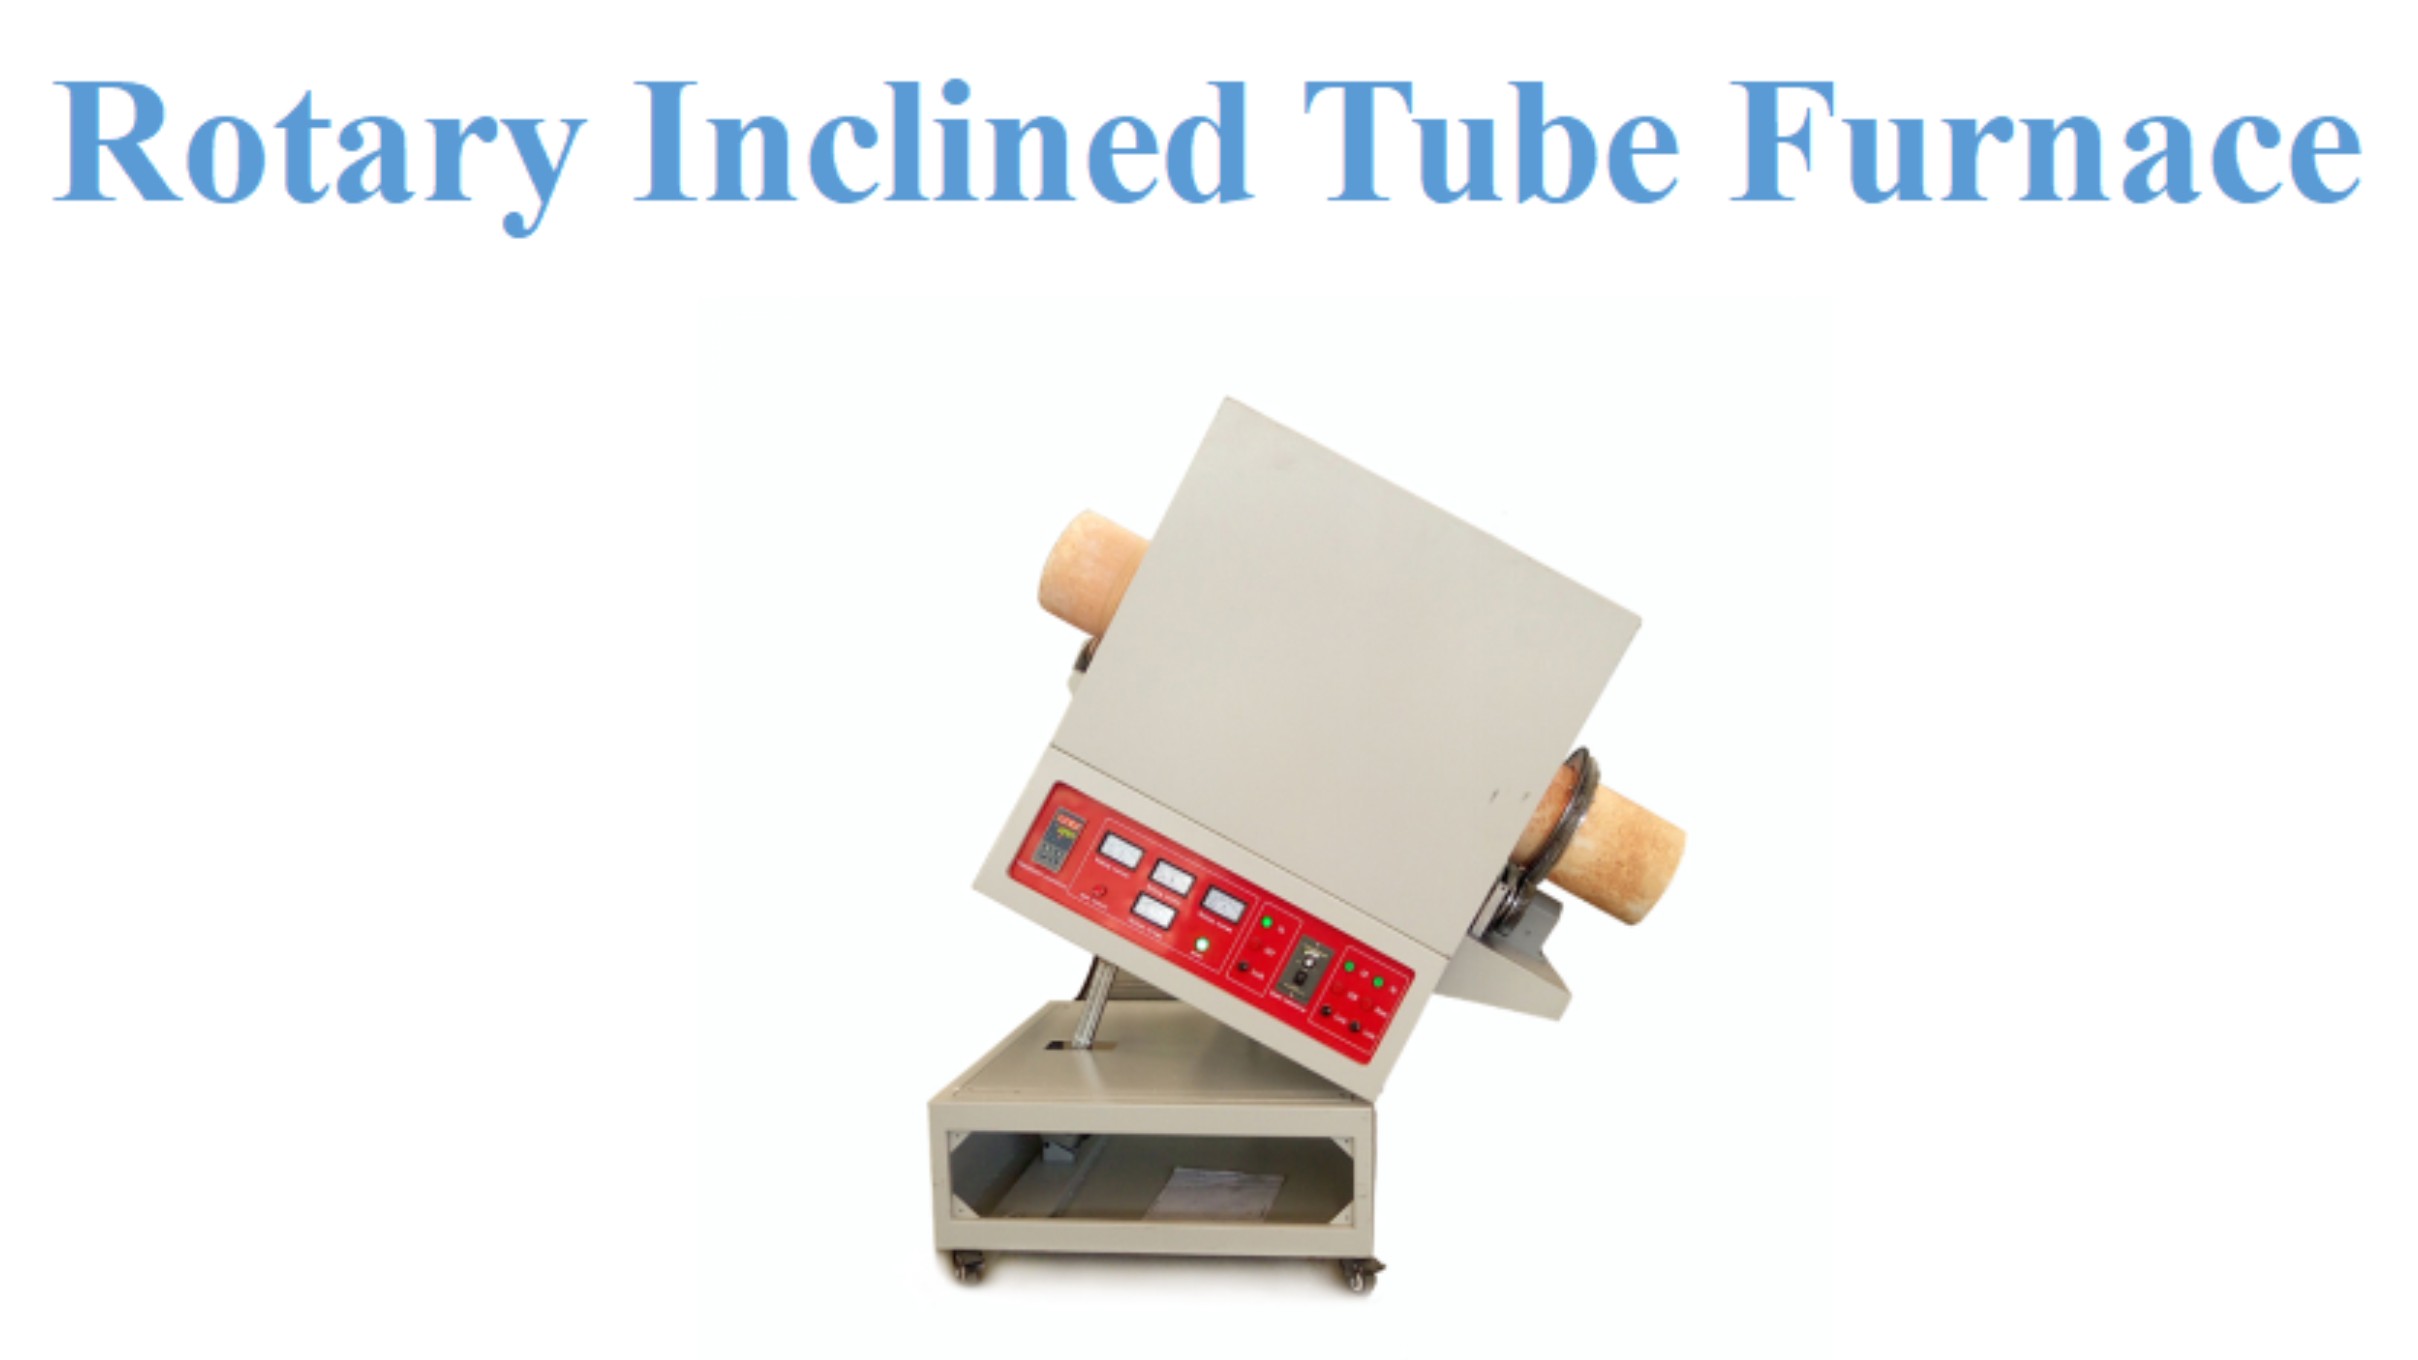 Rotary Inclined Tube Furnace